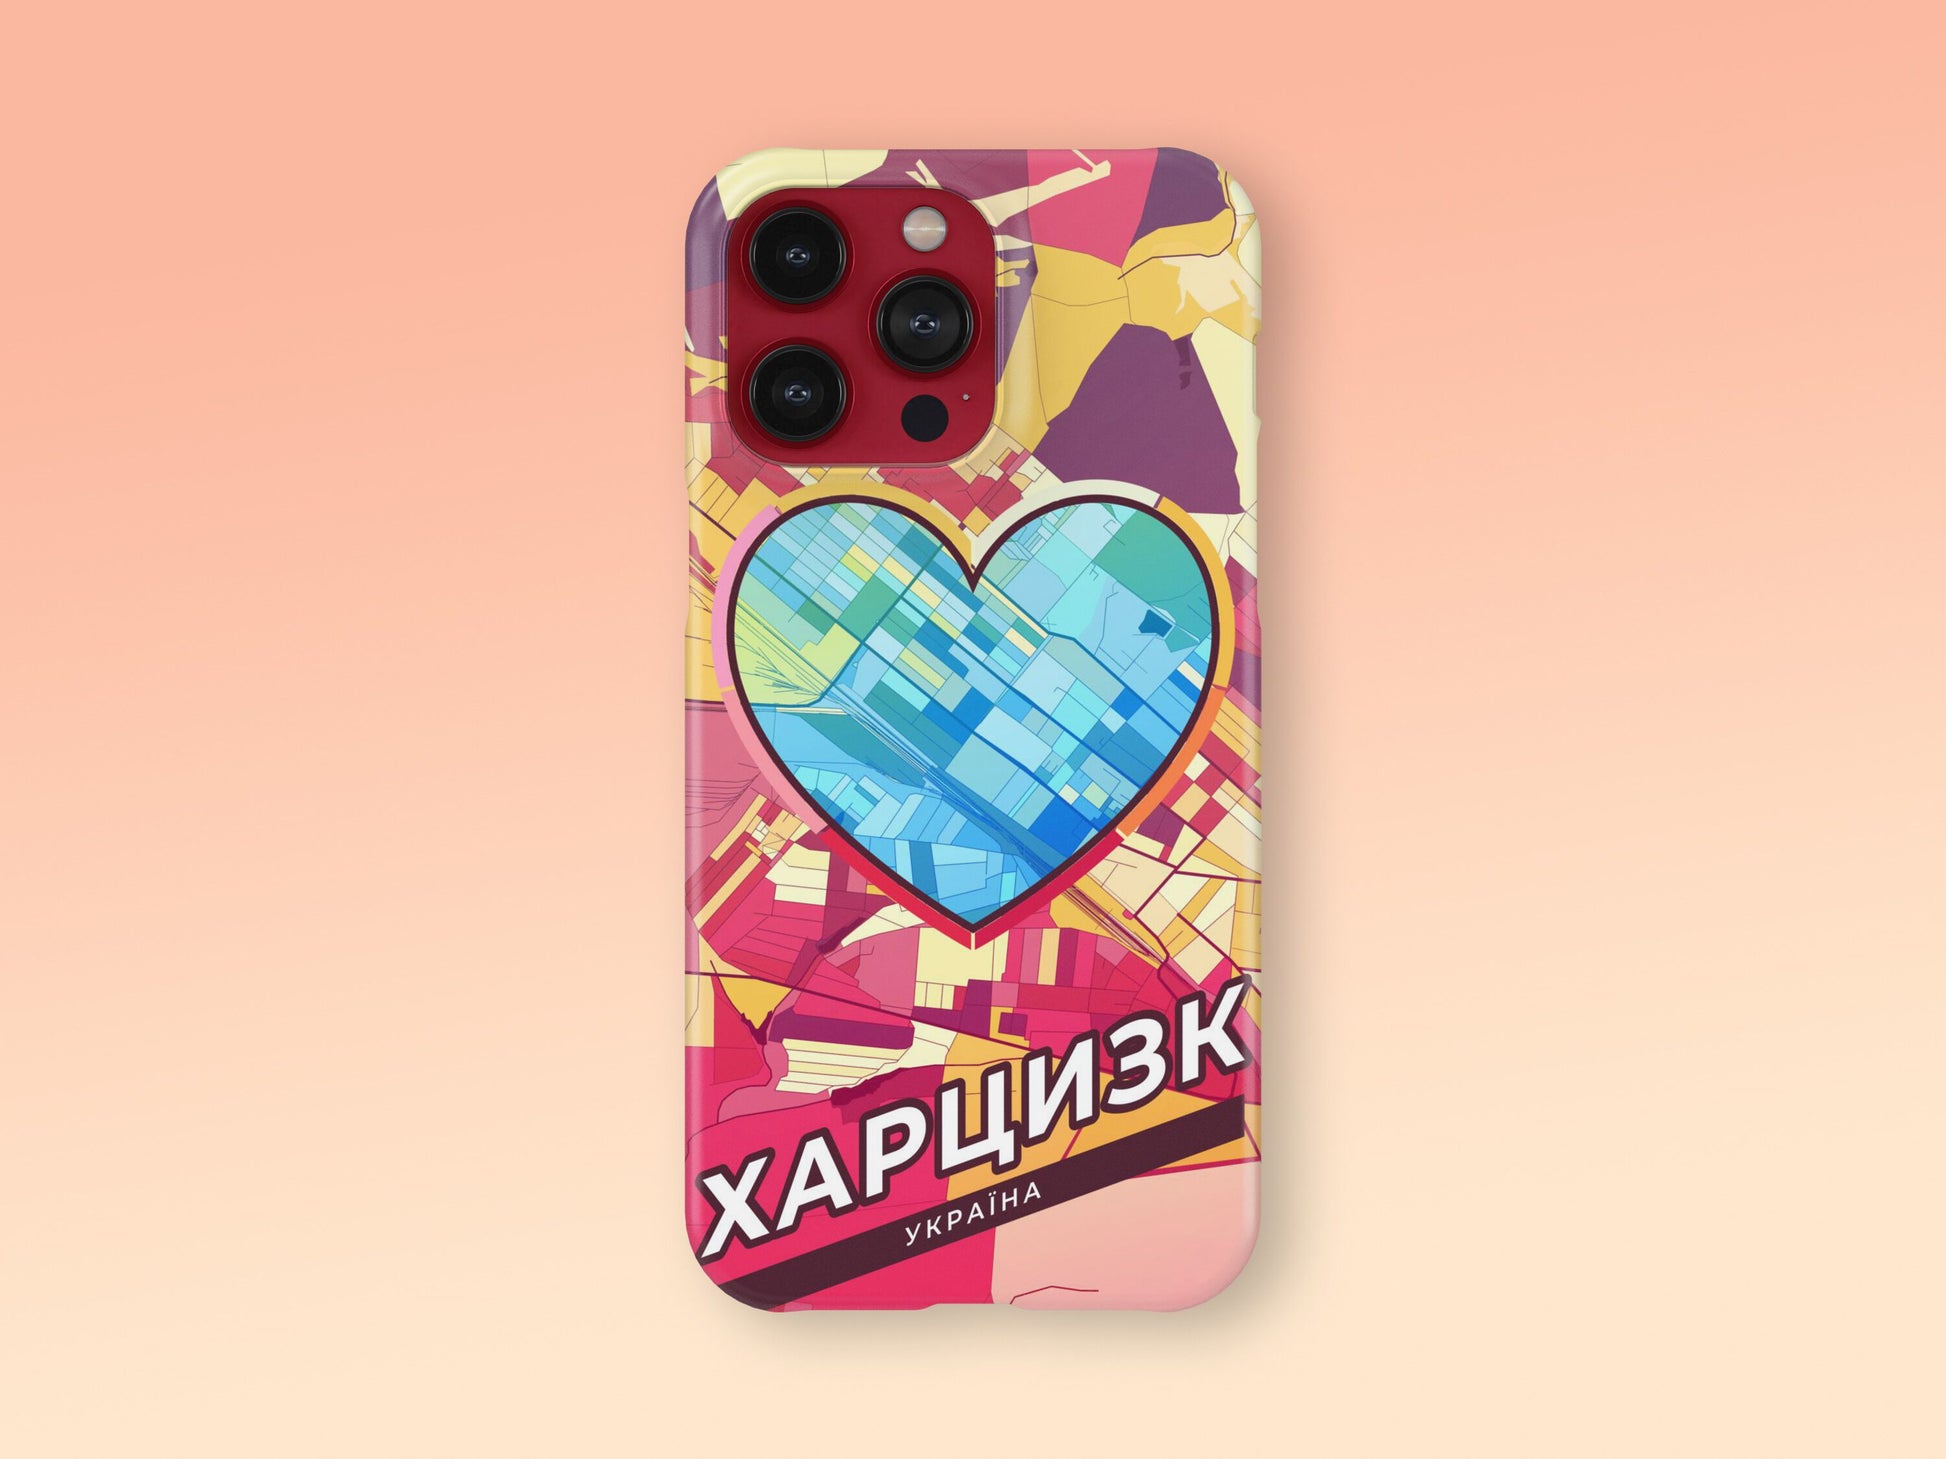 Khartsyzk Ukraine slim phone case with colorful icon. Birthday, wedding or housewarming gift. Couple match cases. 2